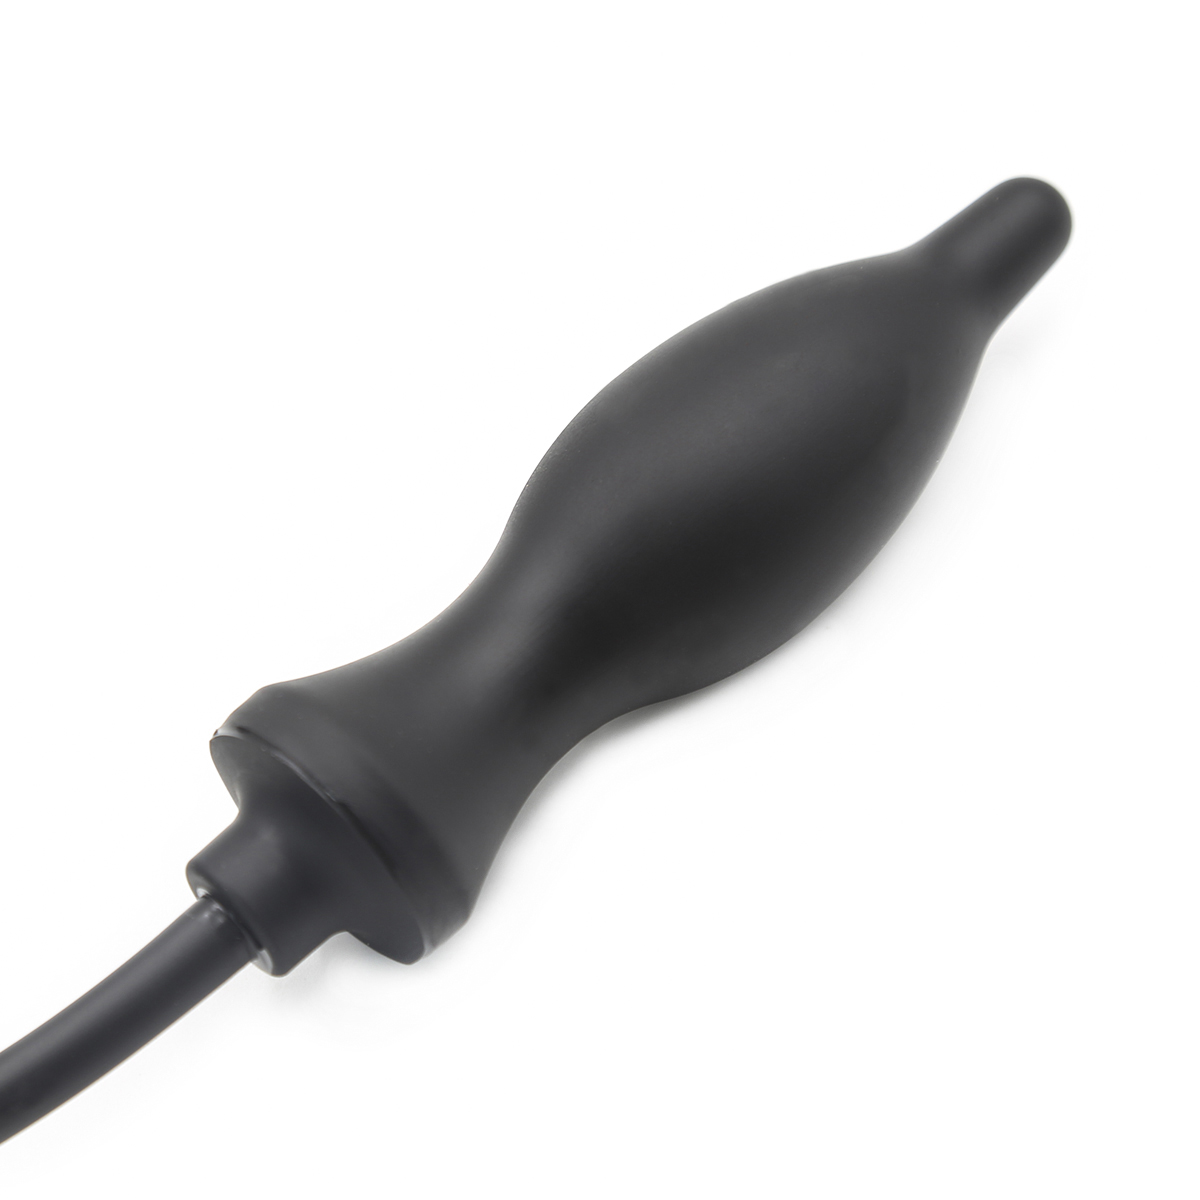 Inflatable-Anal-Plug-Black-OPR-321081-1